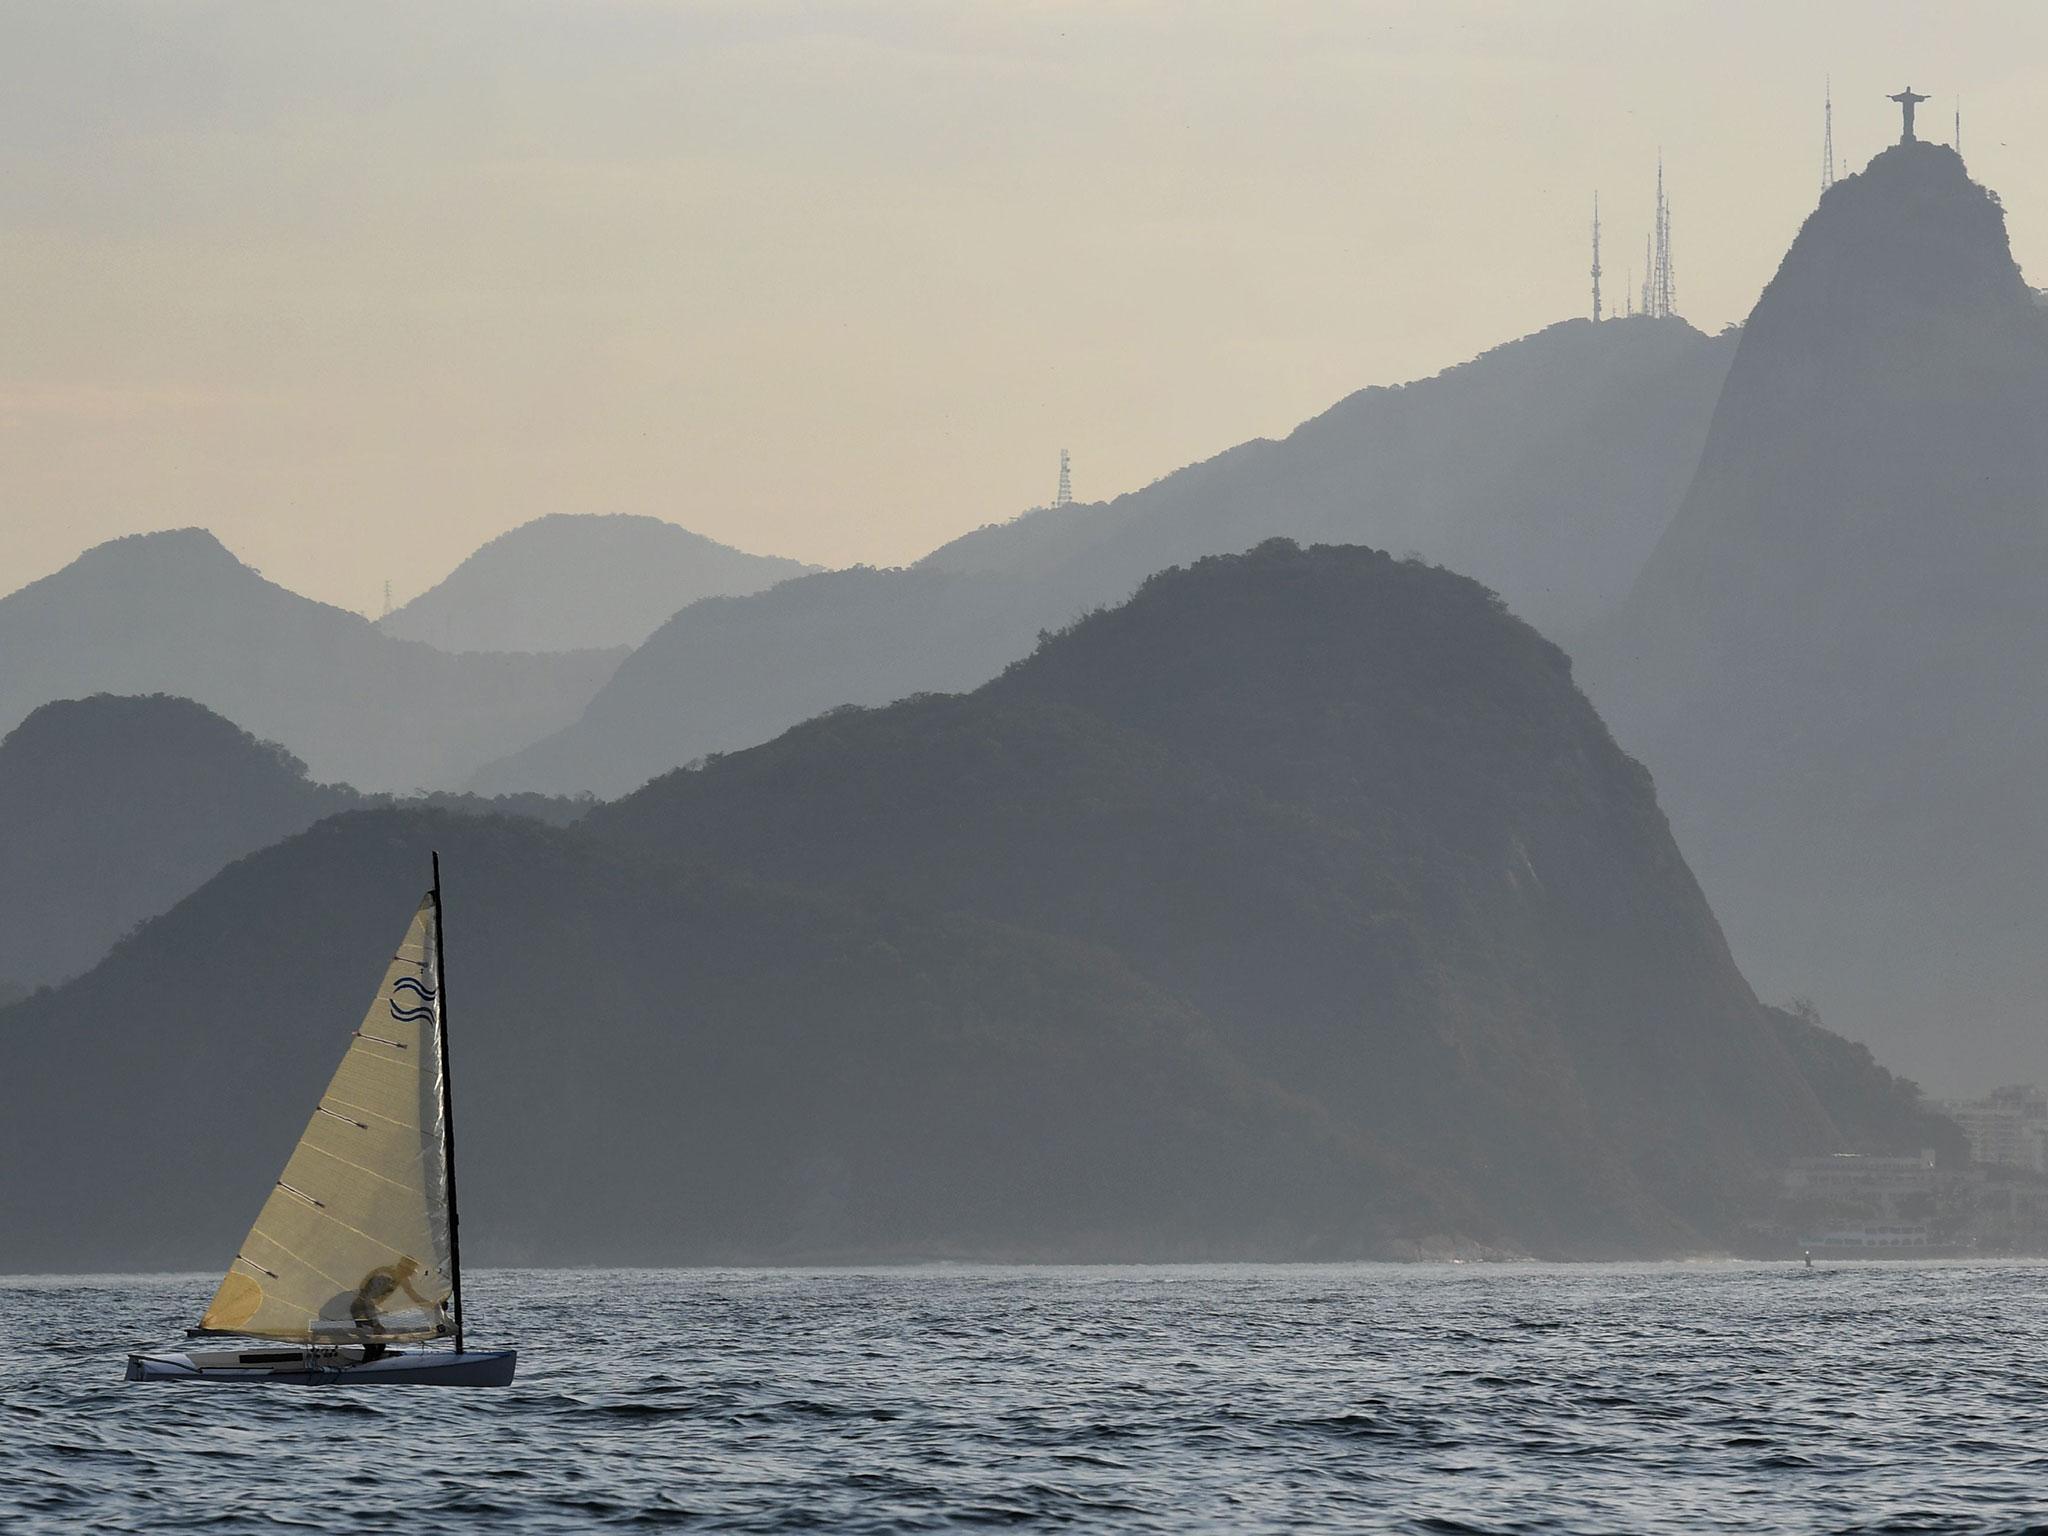 Rio 2016: Severed leg found in Guanabara Bay near sailing event